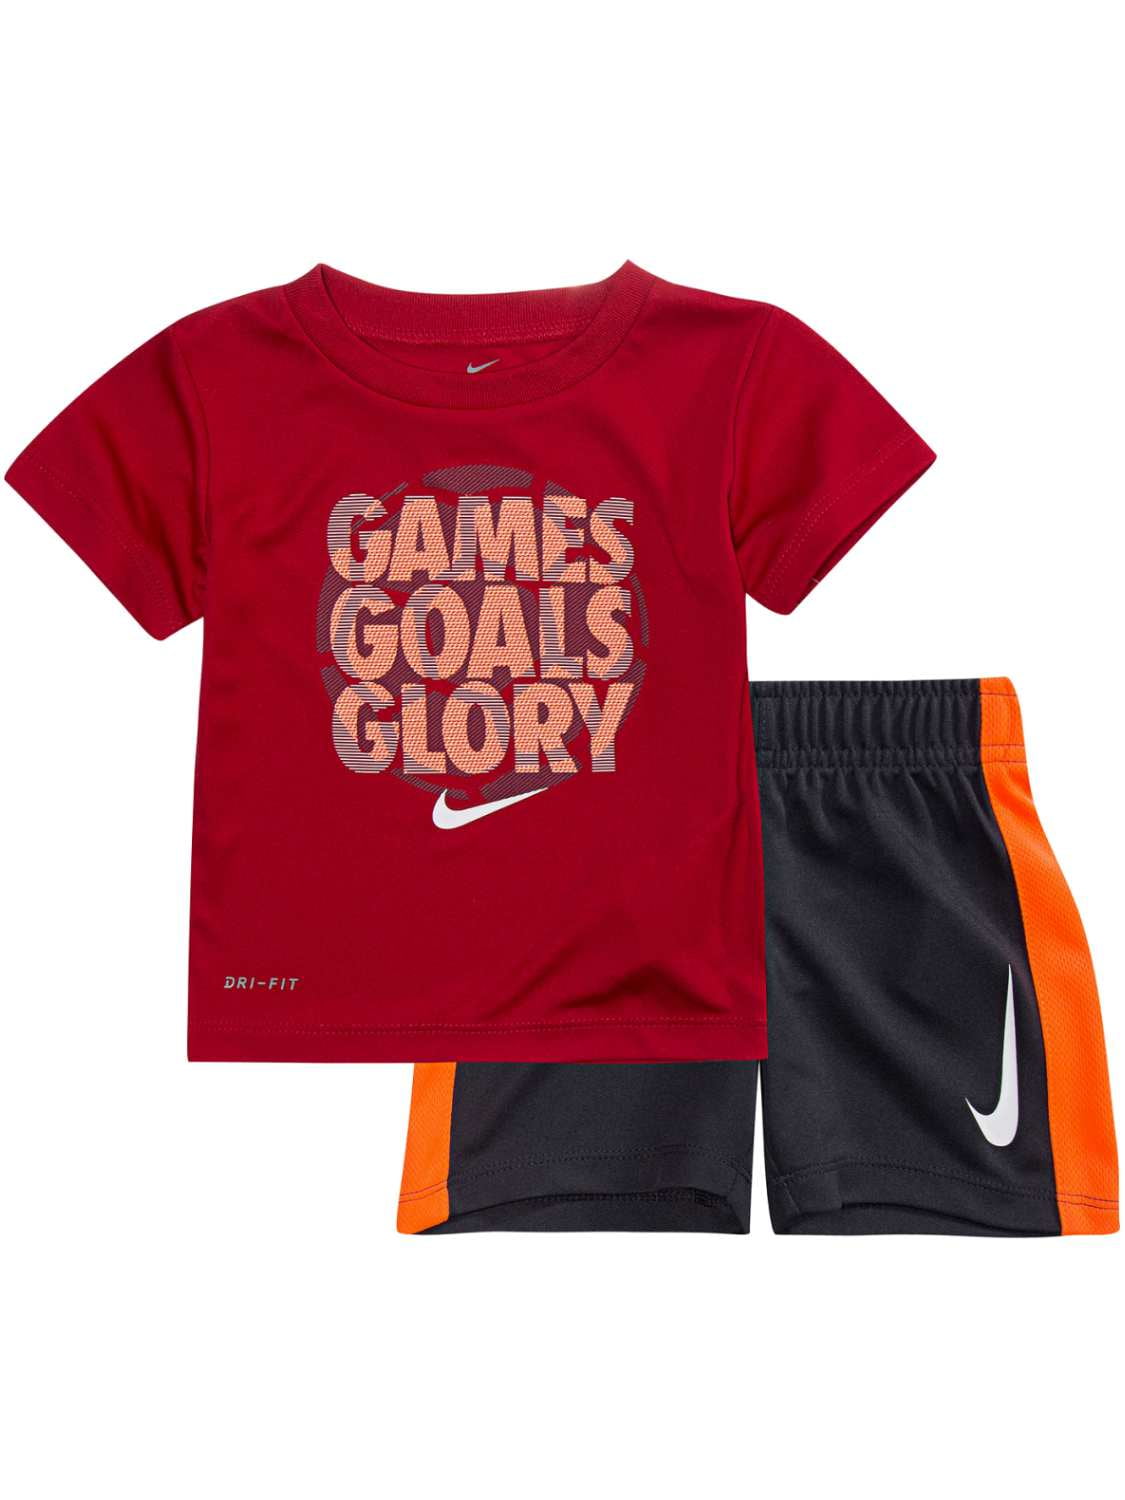 viering Kilauea Mountain menigte Nike Dri-fit Infant Boys Red Games Goals Glory Soccer Shirt & Shorts Set  12M - Walmart.com